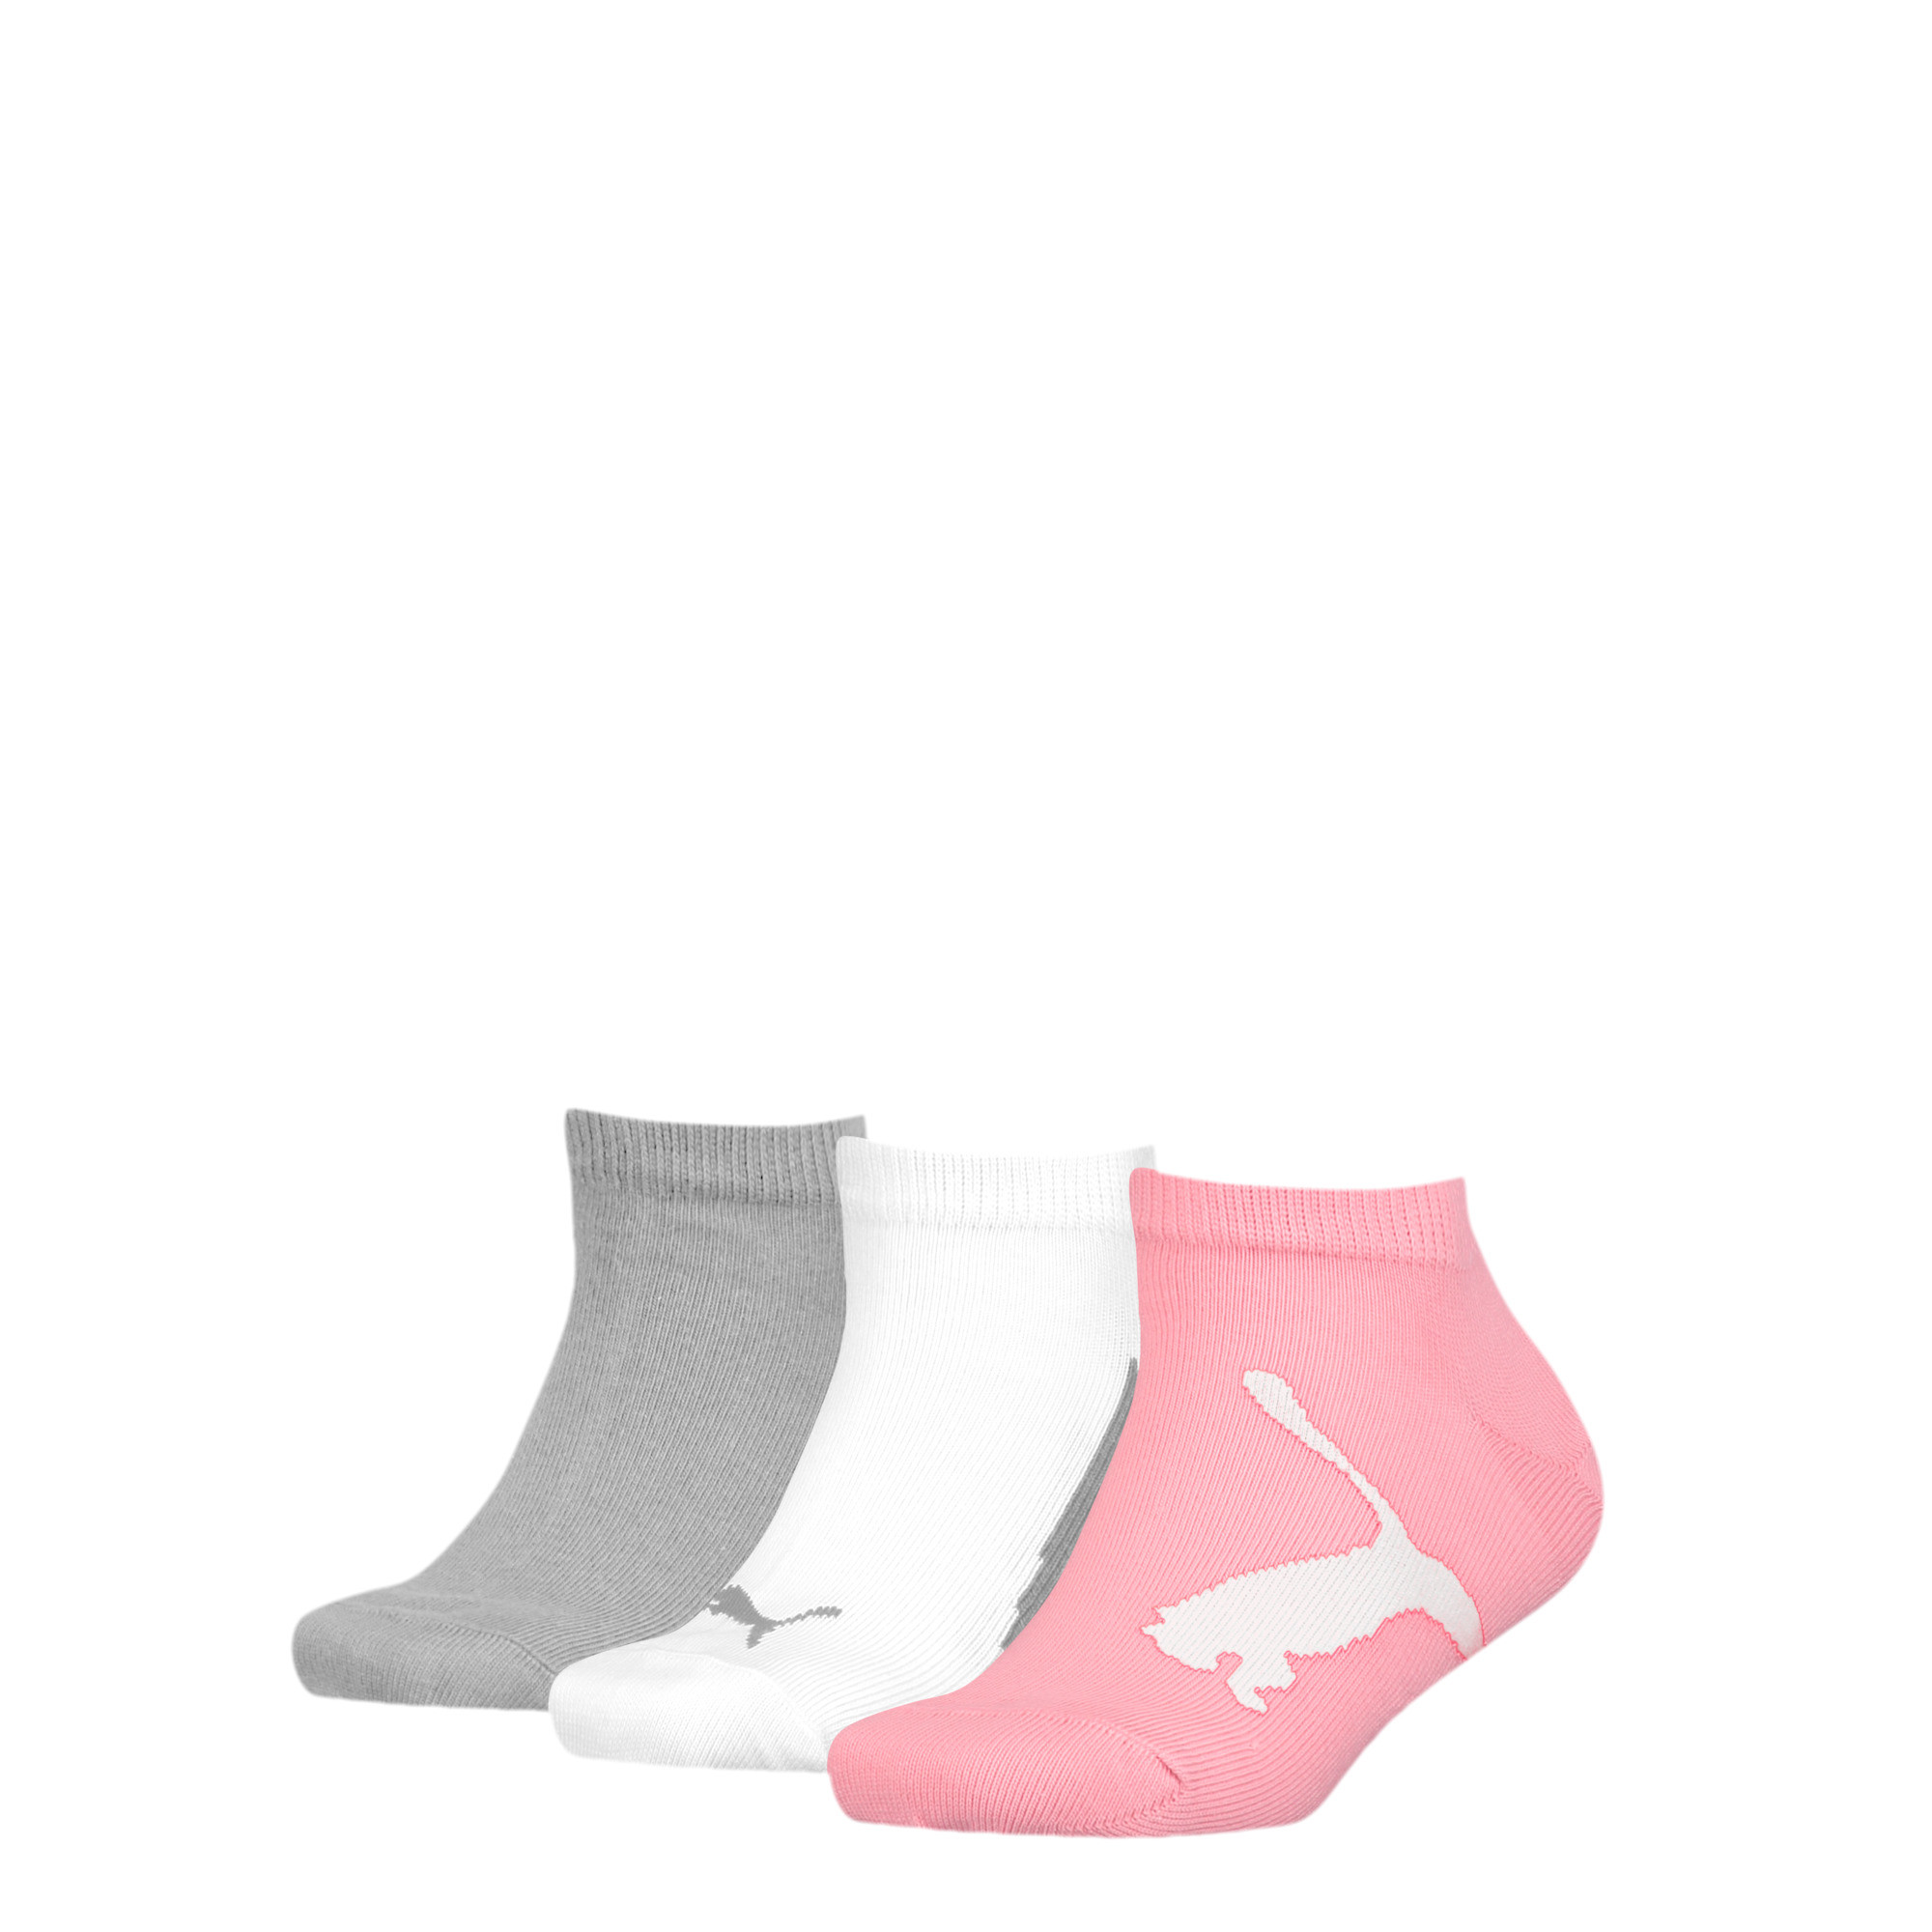 Kids' PUMA BWT Sneaker - Trainer Socks 3 Pack In Pink/Grey, Size 35-38